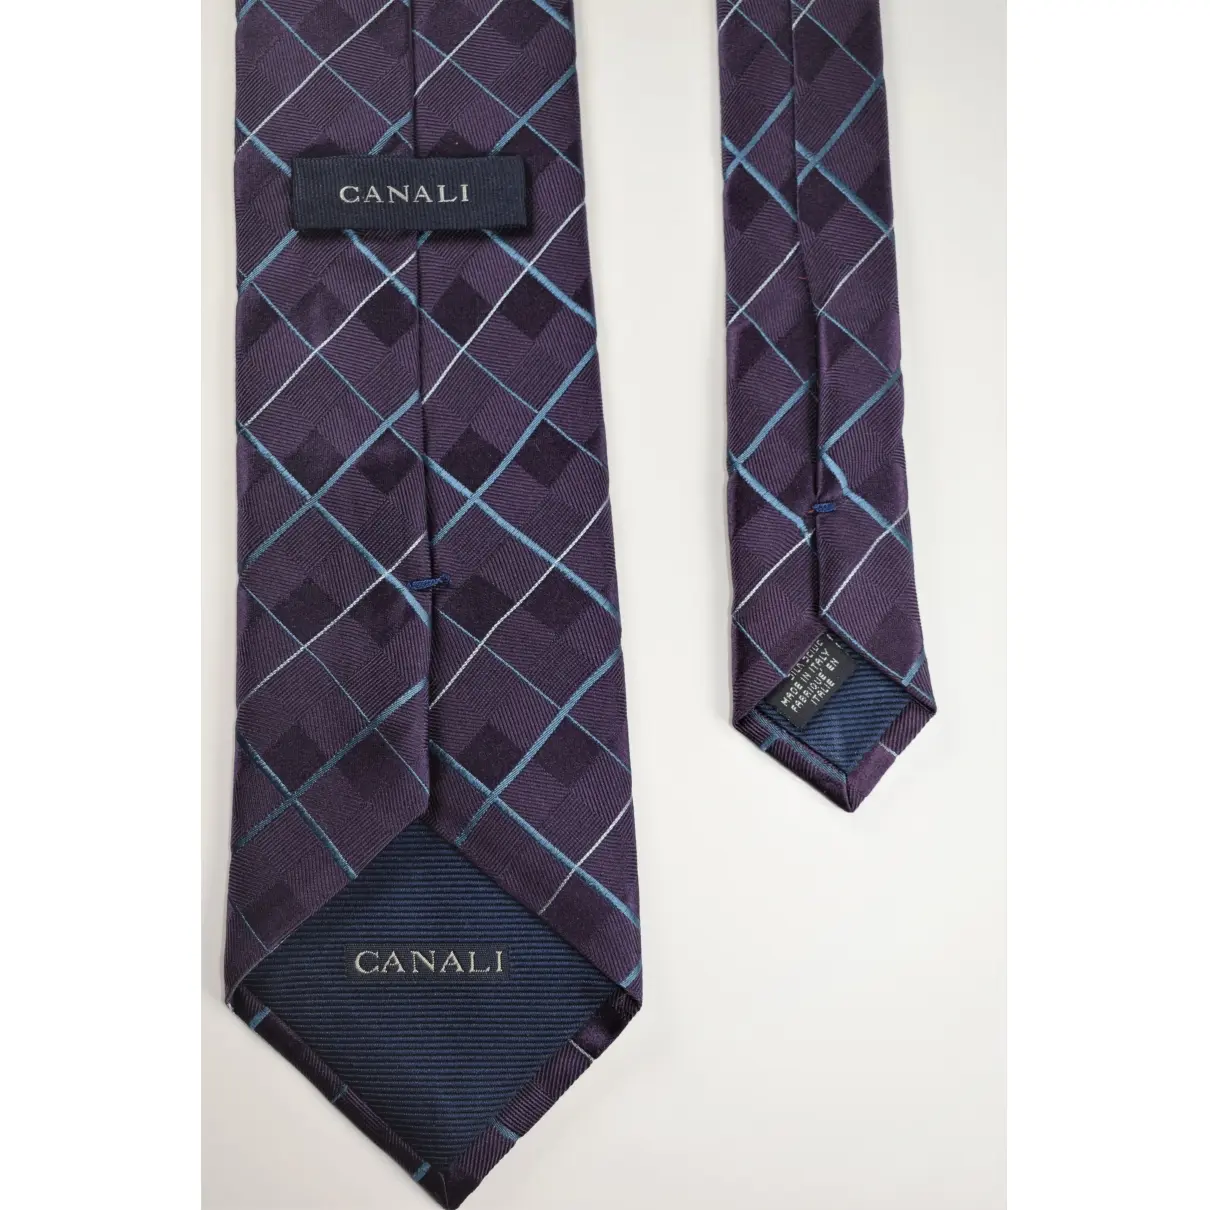 Canali Silk tie for sale